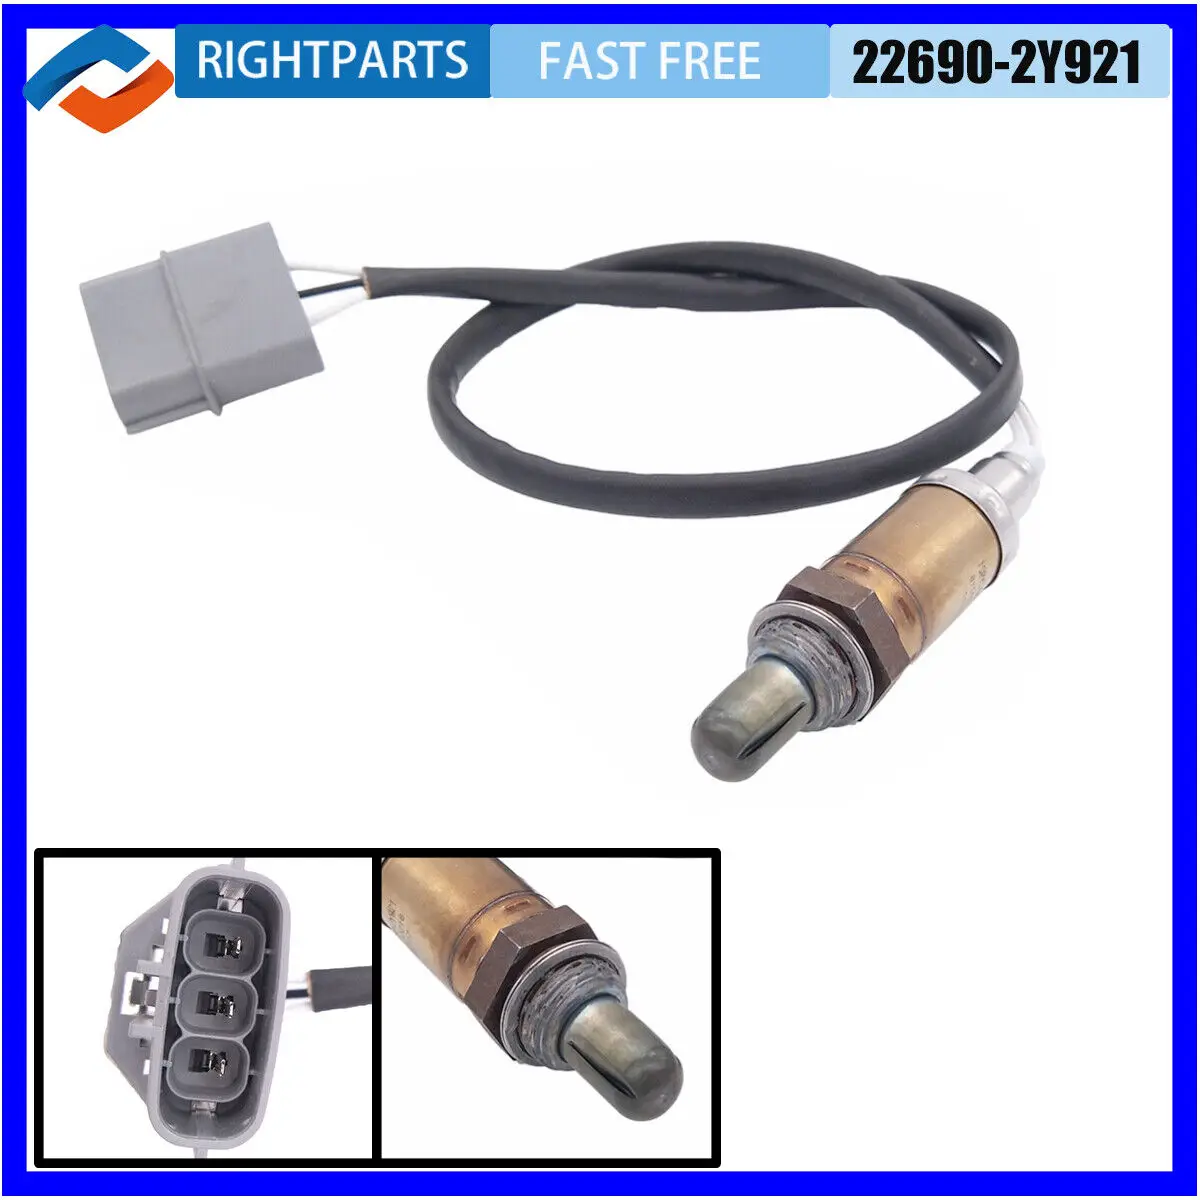 

RIGHTPARTS 22690-2Y921 226902Y921 Car Oxygen Sensor For NISSAN MAXIMA INFINITI I30 2000-2001 For NISSAN O2 Sensor Auto Parts